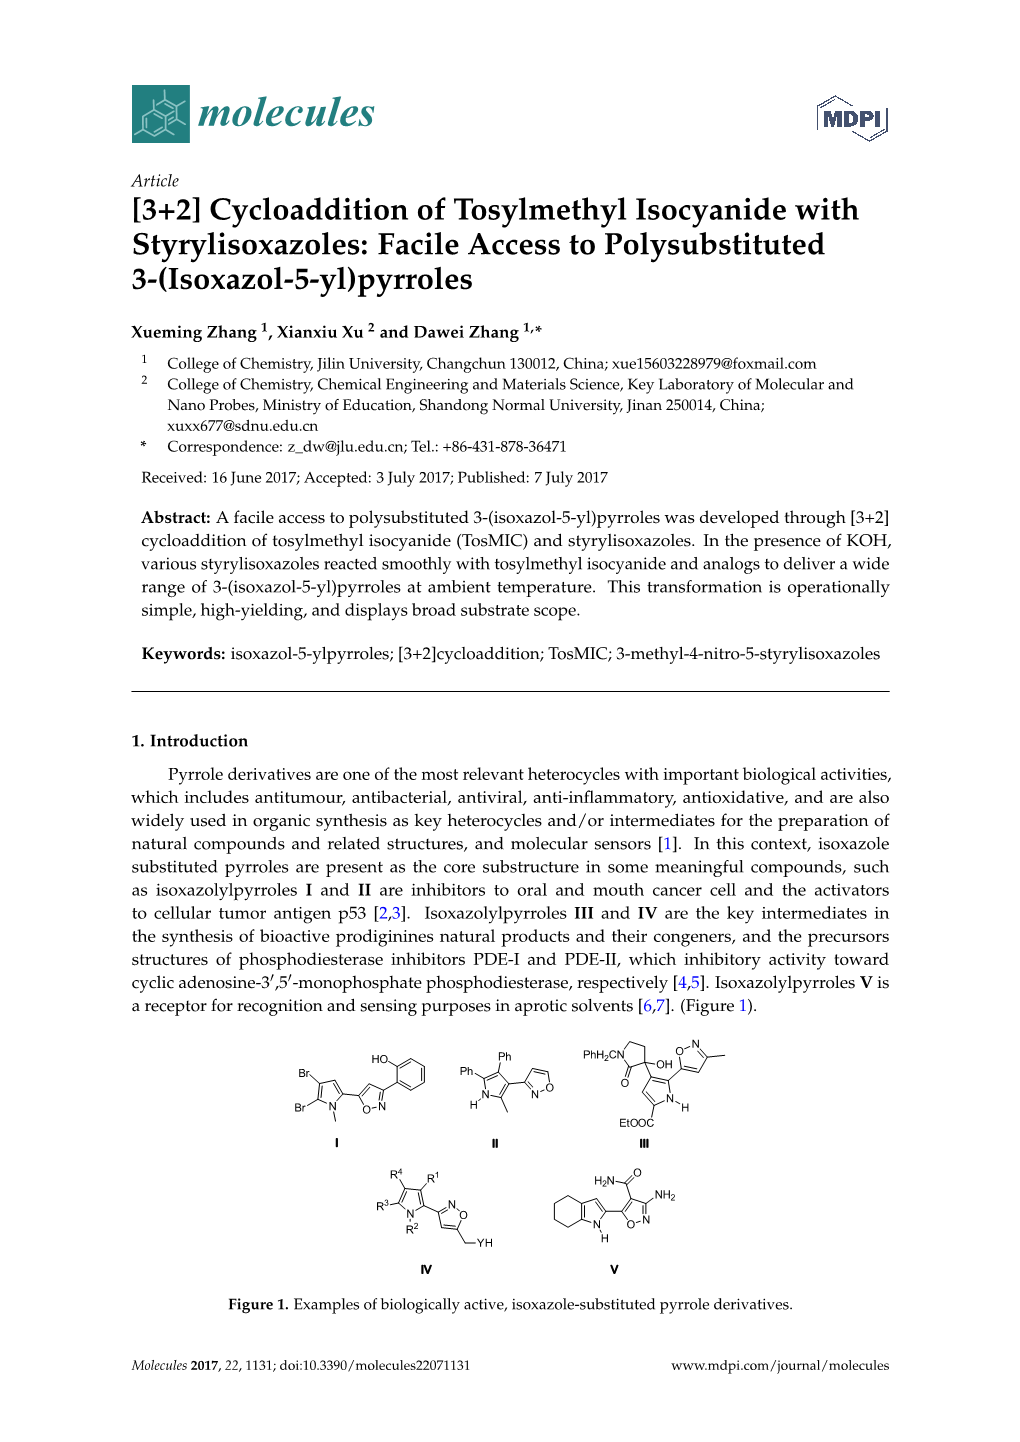 Cycloaddition of Tosylmethyl Isocyanide with Styrylisoxazoles